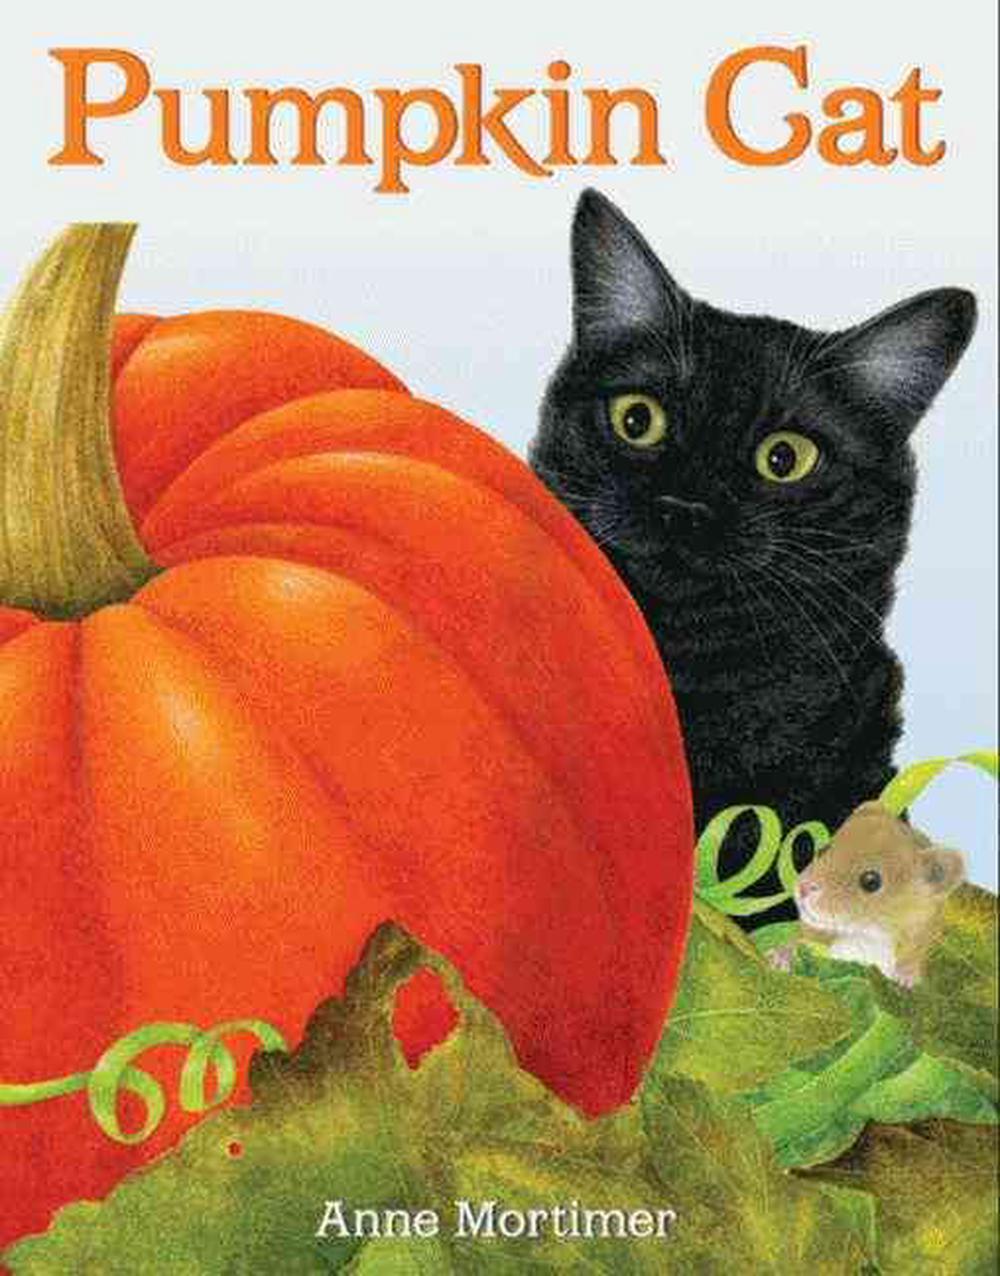 Pumpkin Cat by Anne Mortimer